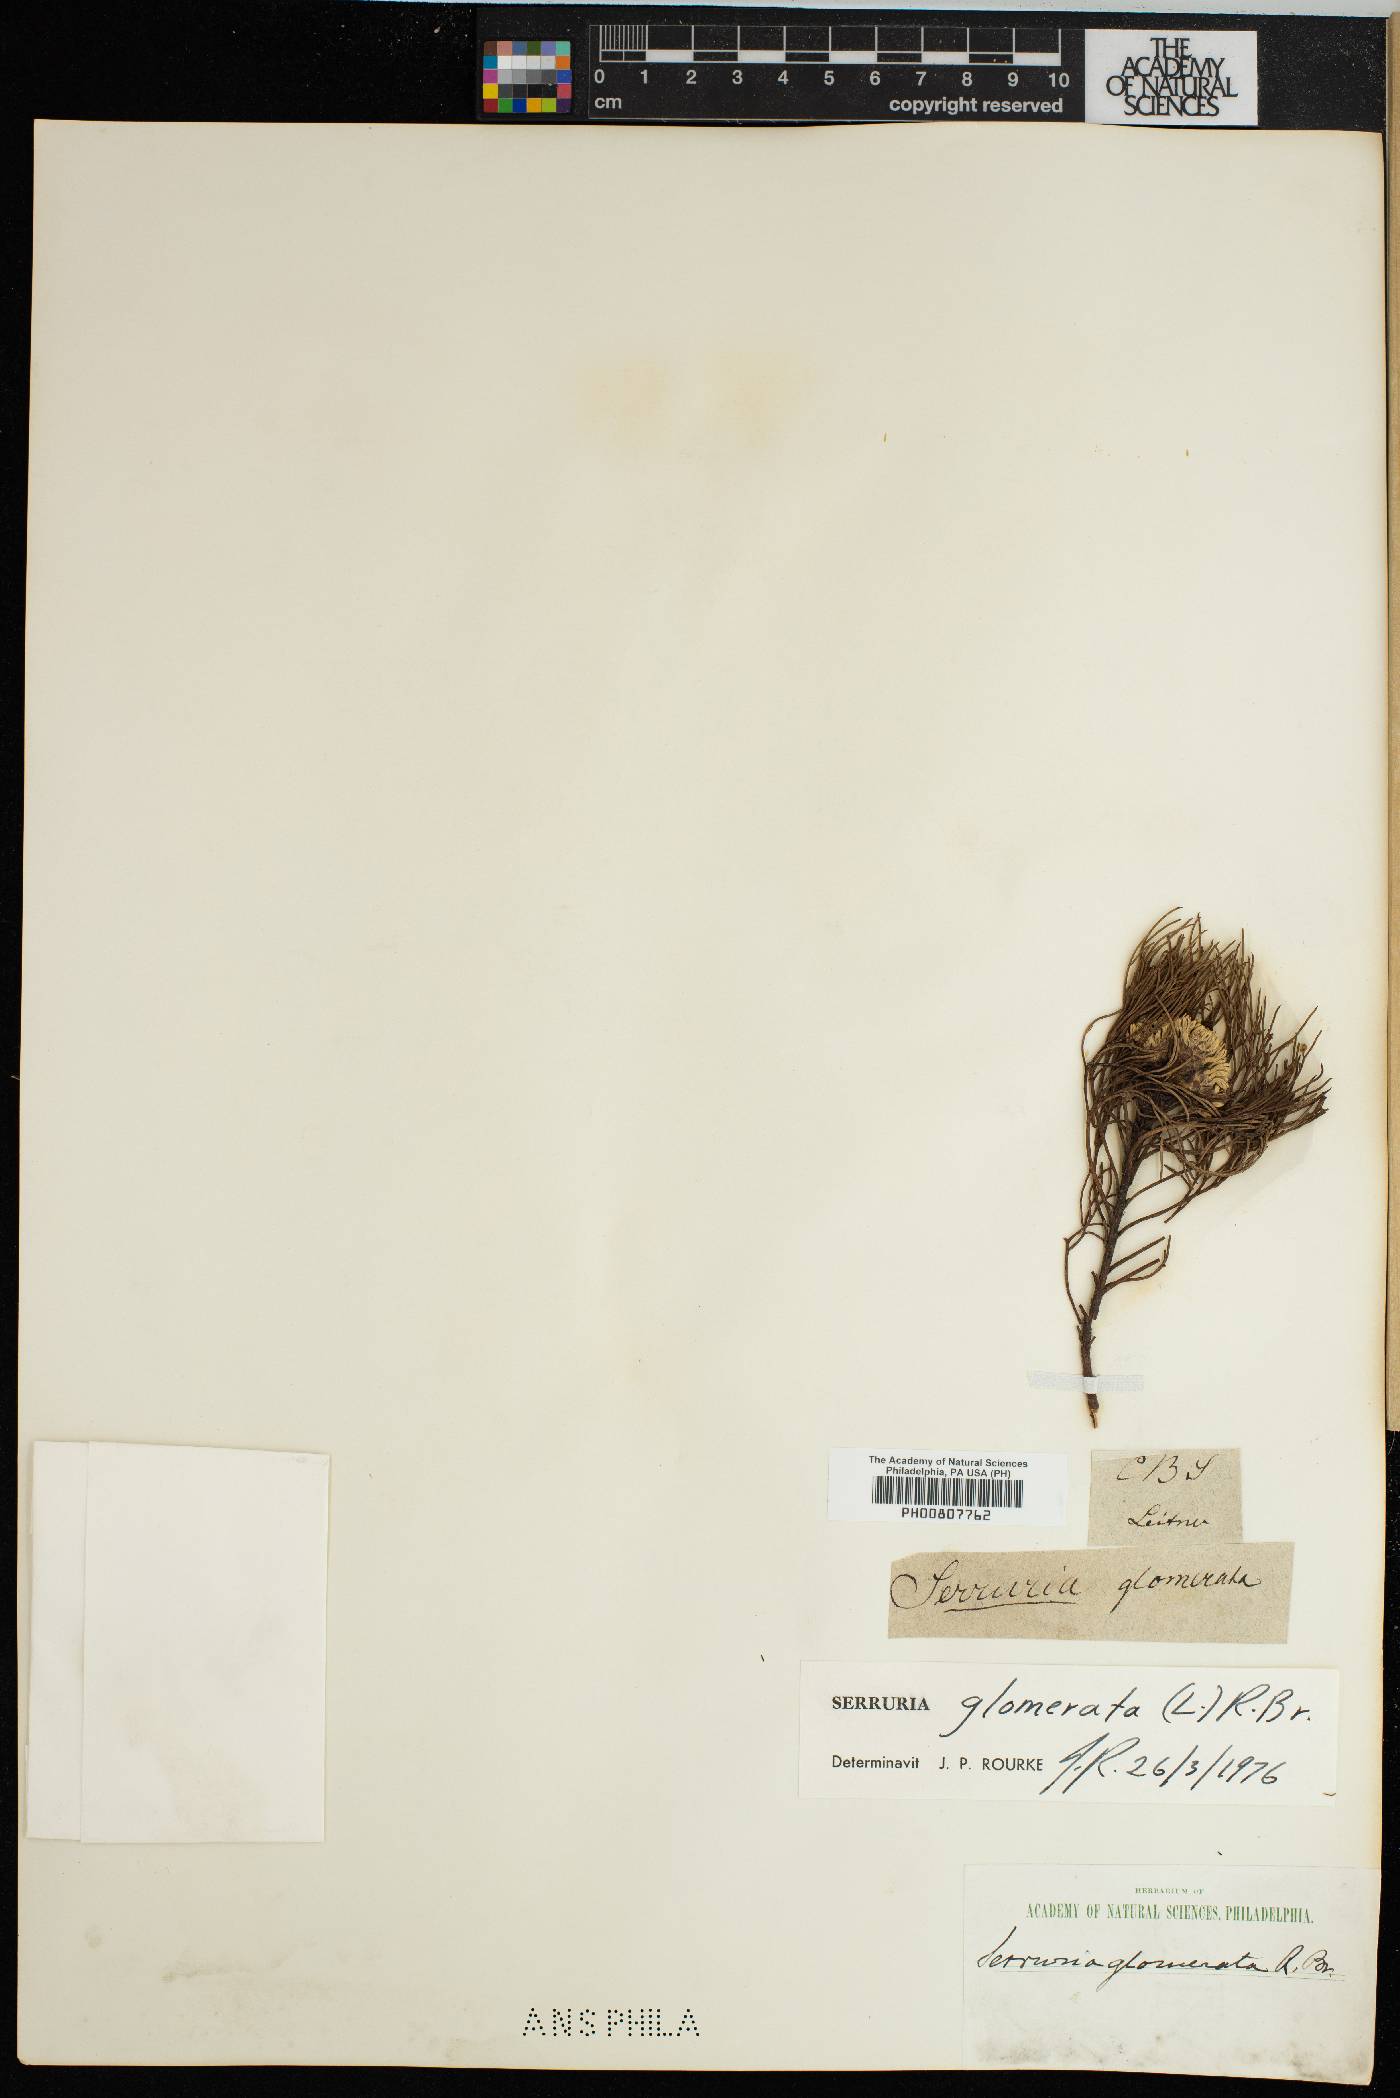 Serruria glomerata image